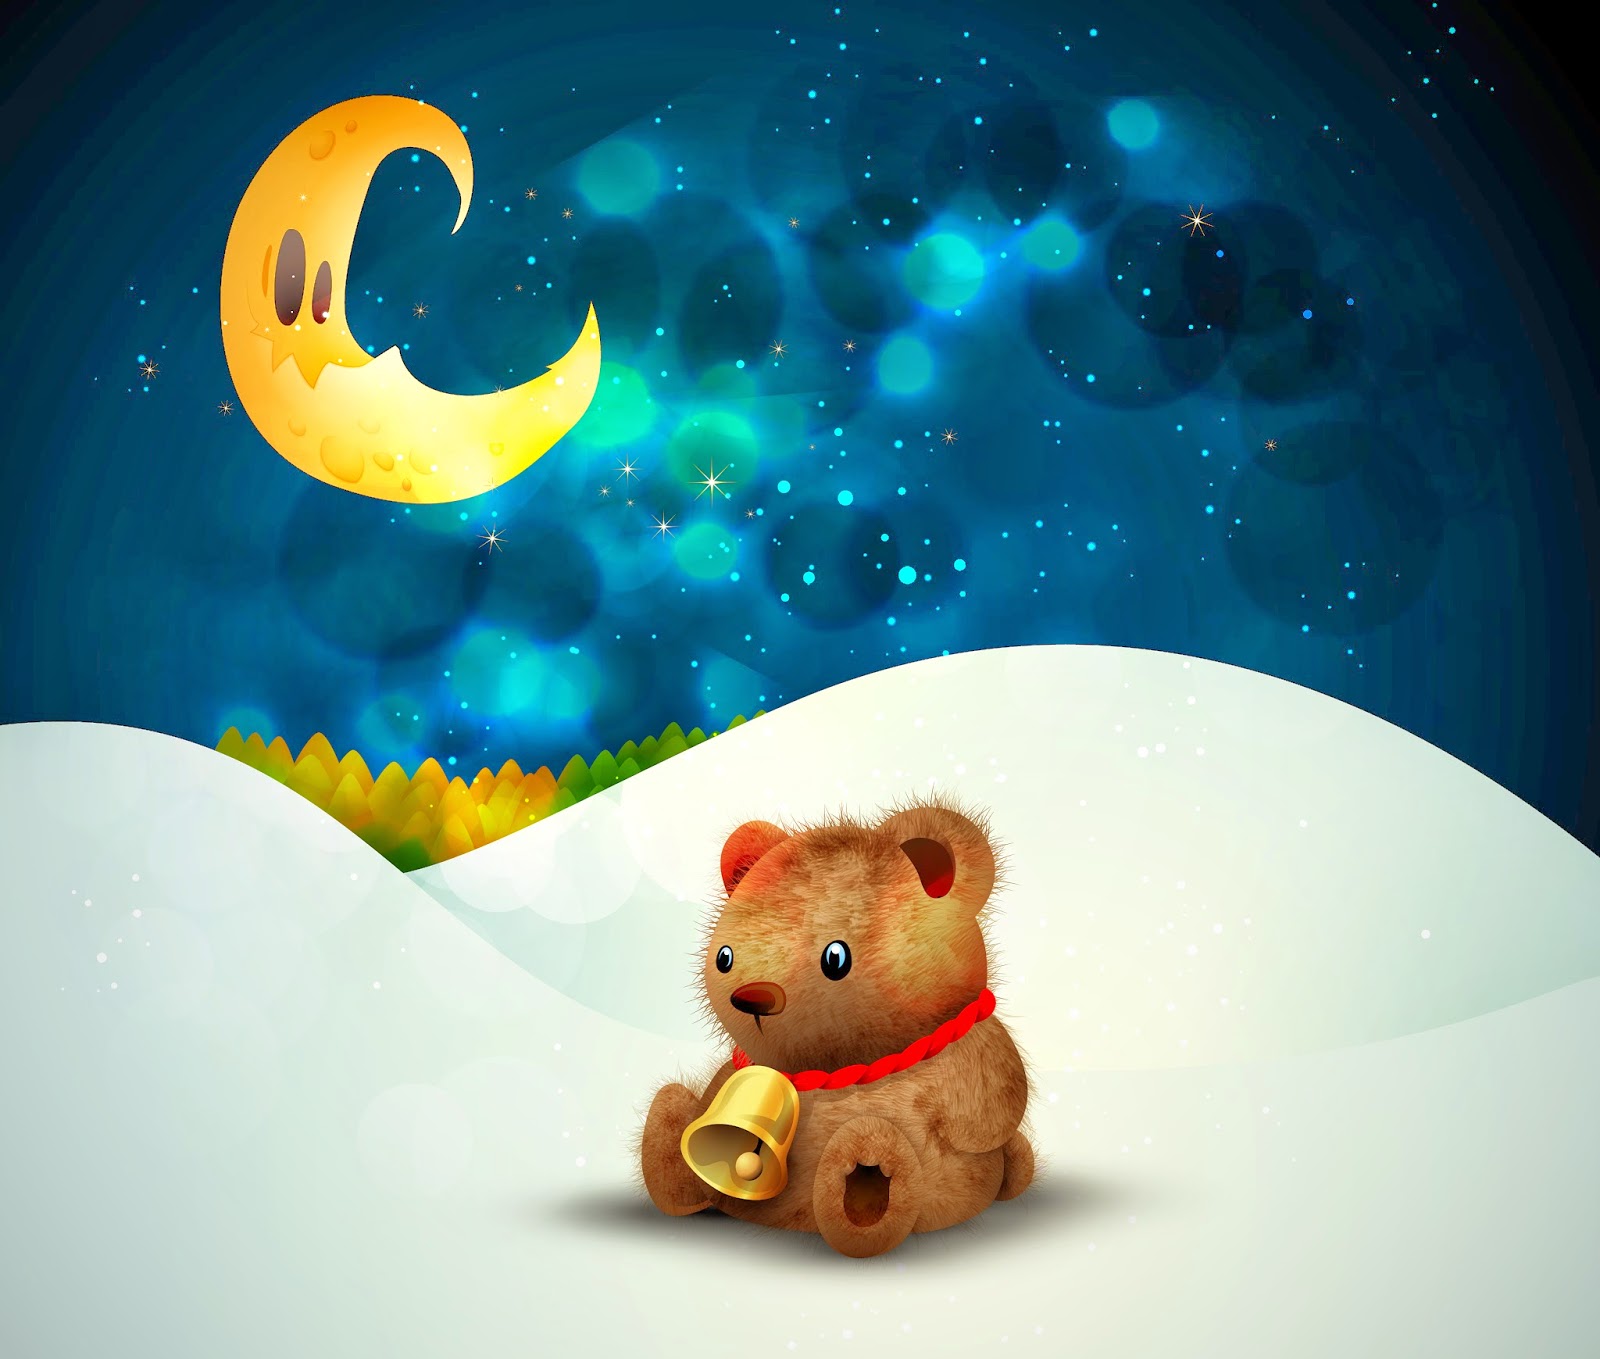 Tải xuống APK Cute Teddy Bear Wallpaper cho Android